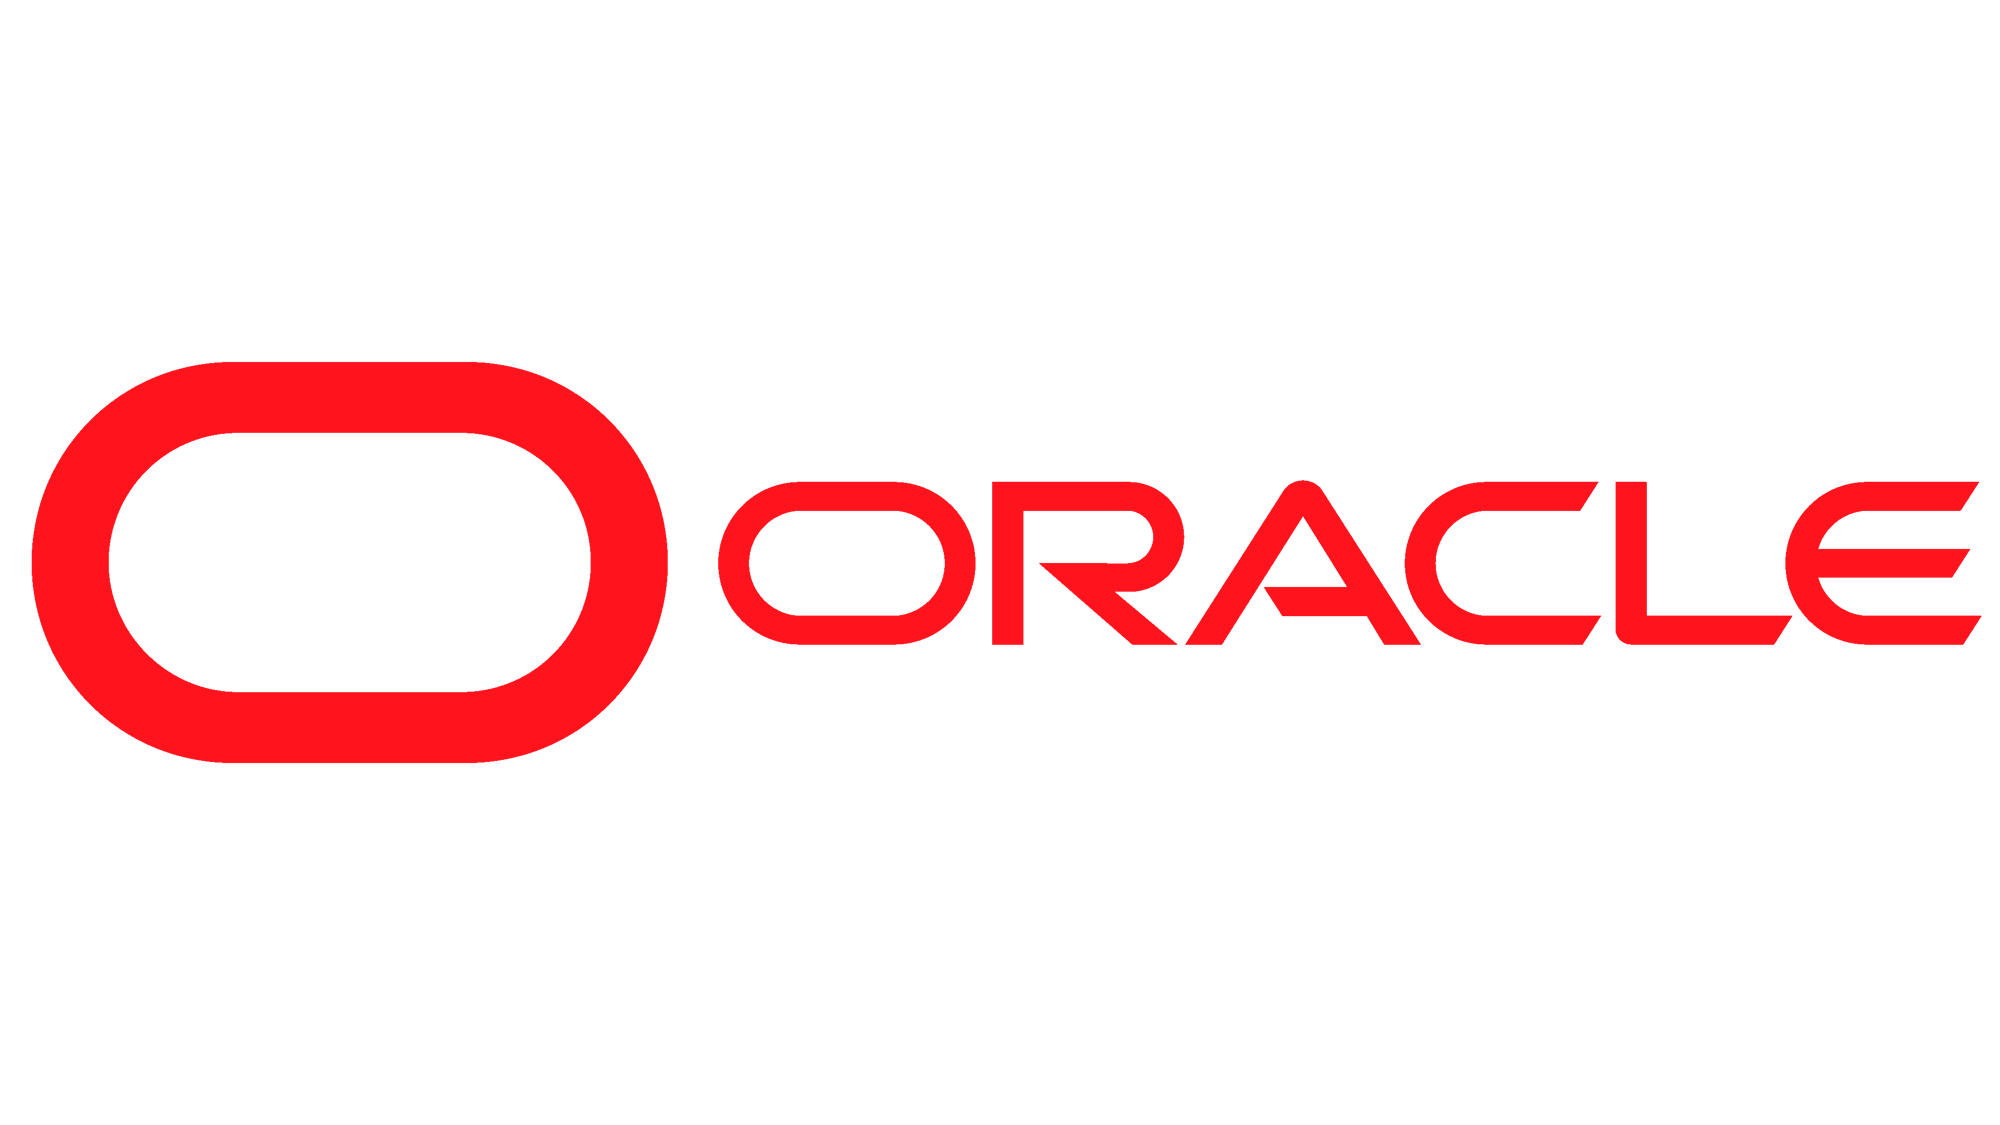 Oracle-Logo-1995-Present